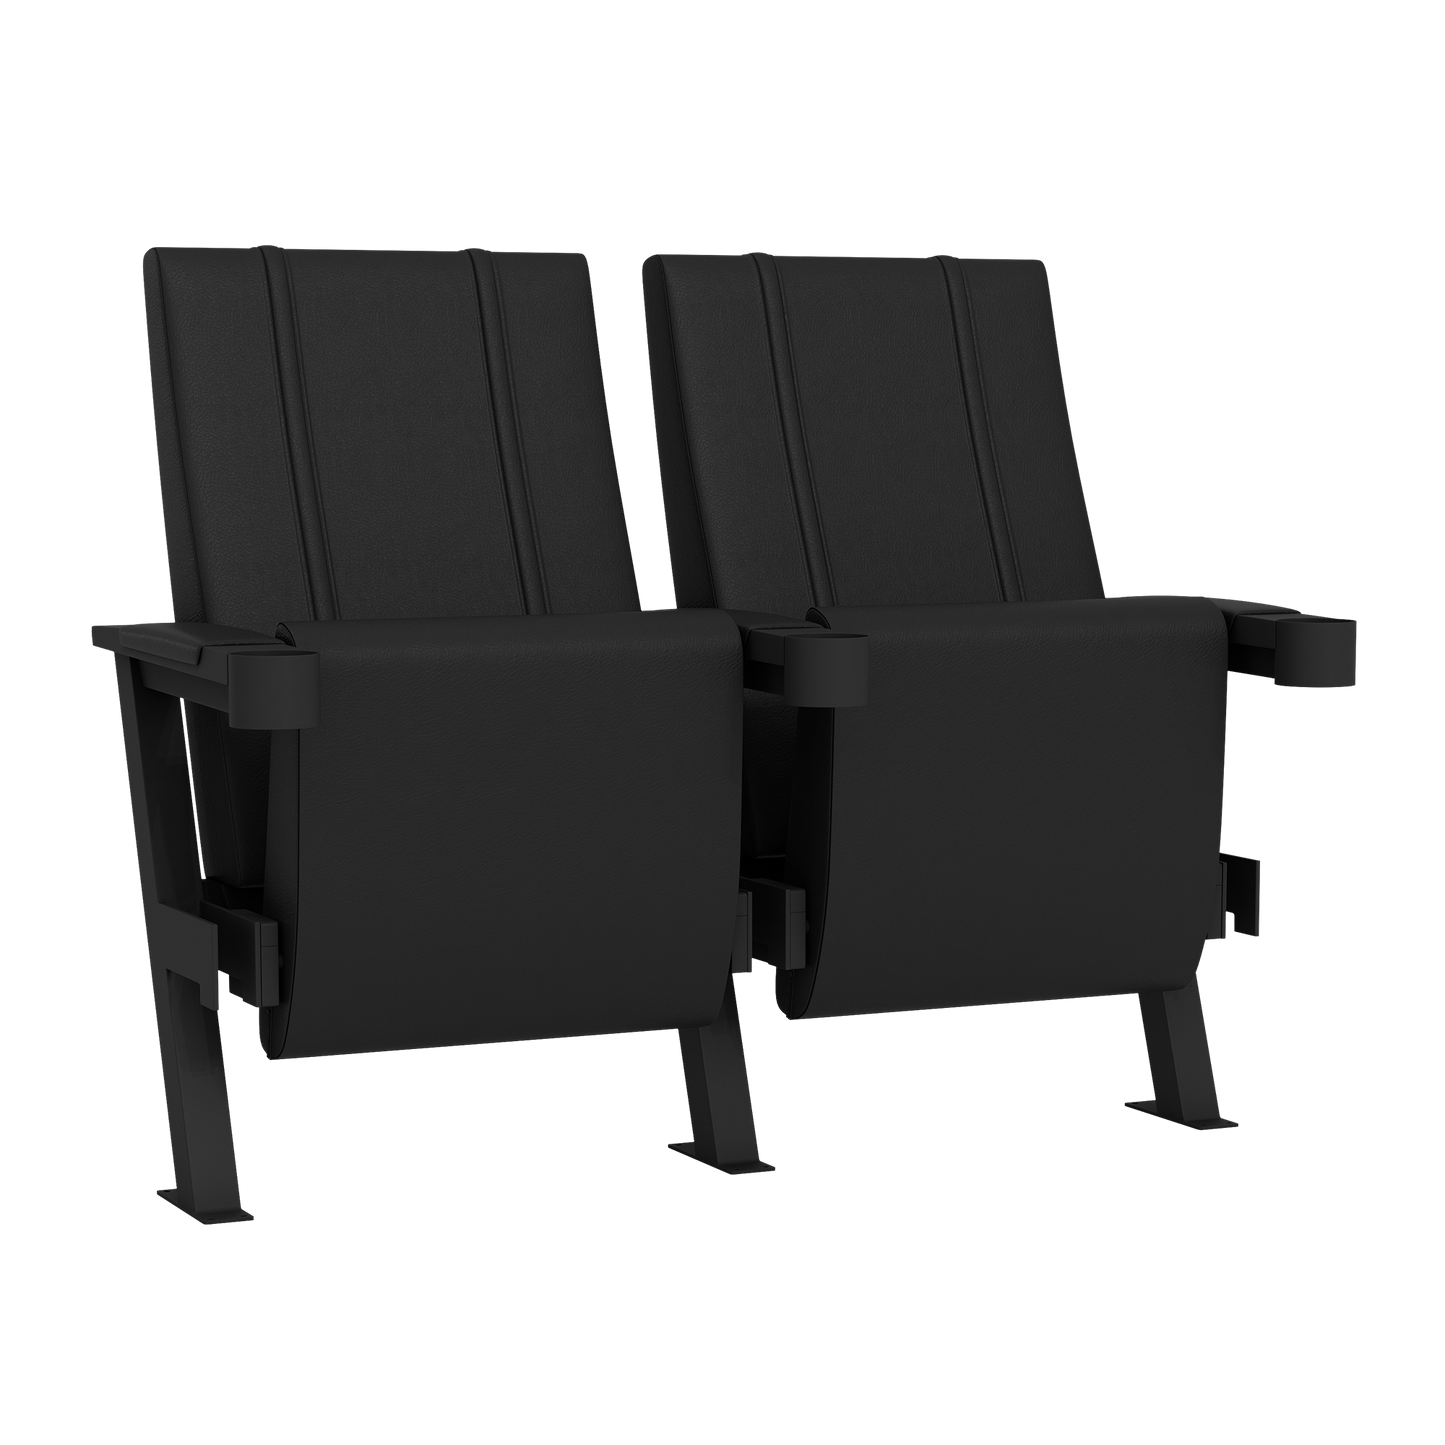 SuiteMax 3.5 VIP Seats with Cincinnati Bengals Secondary Logo